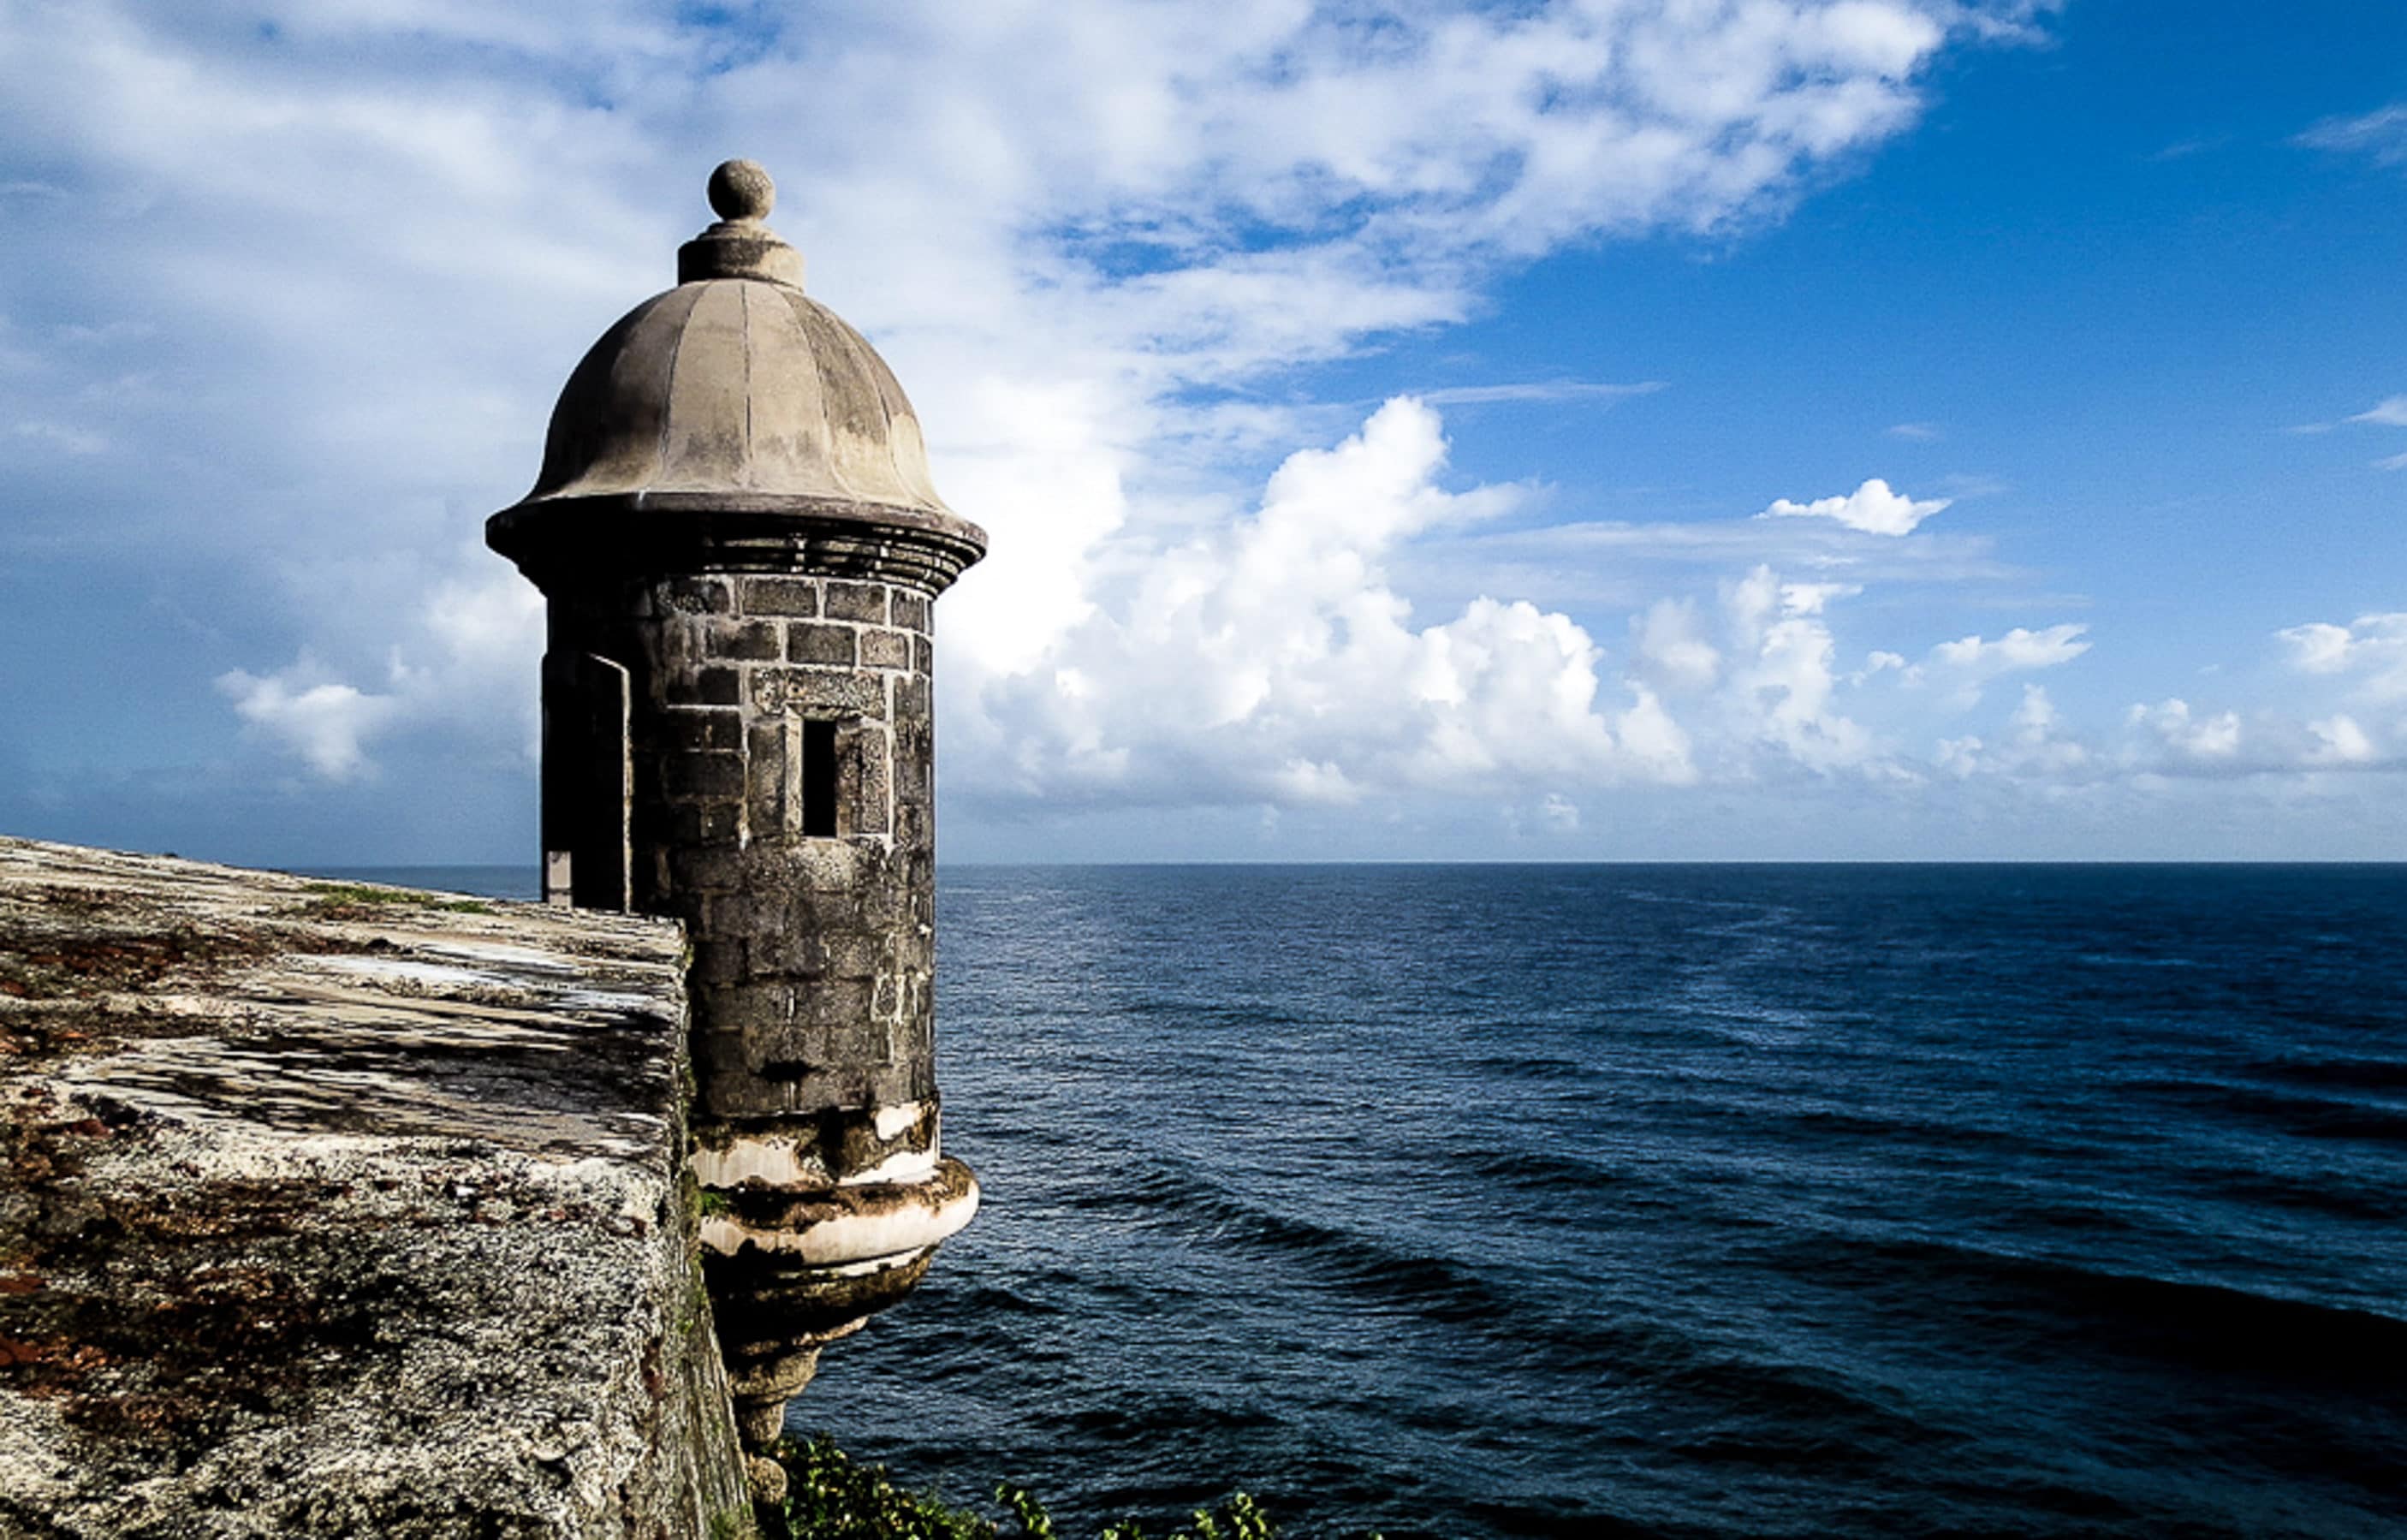 Iconic San Juan sentry box, Puerto Rico | Credit: Zach Stadler